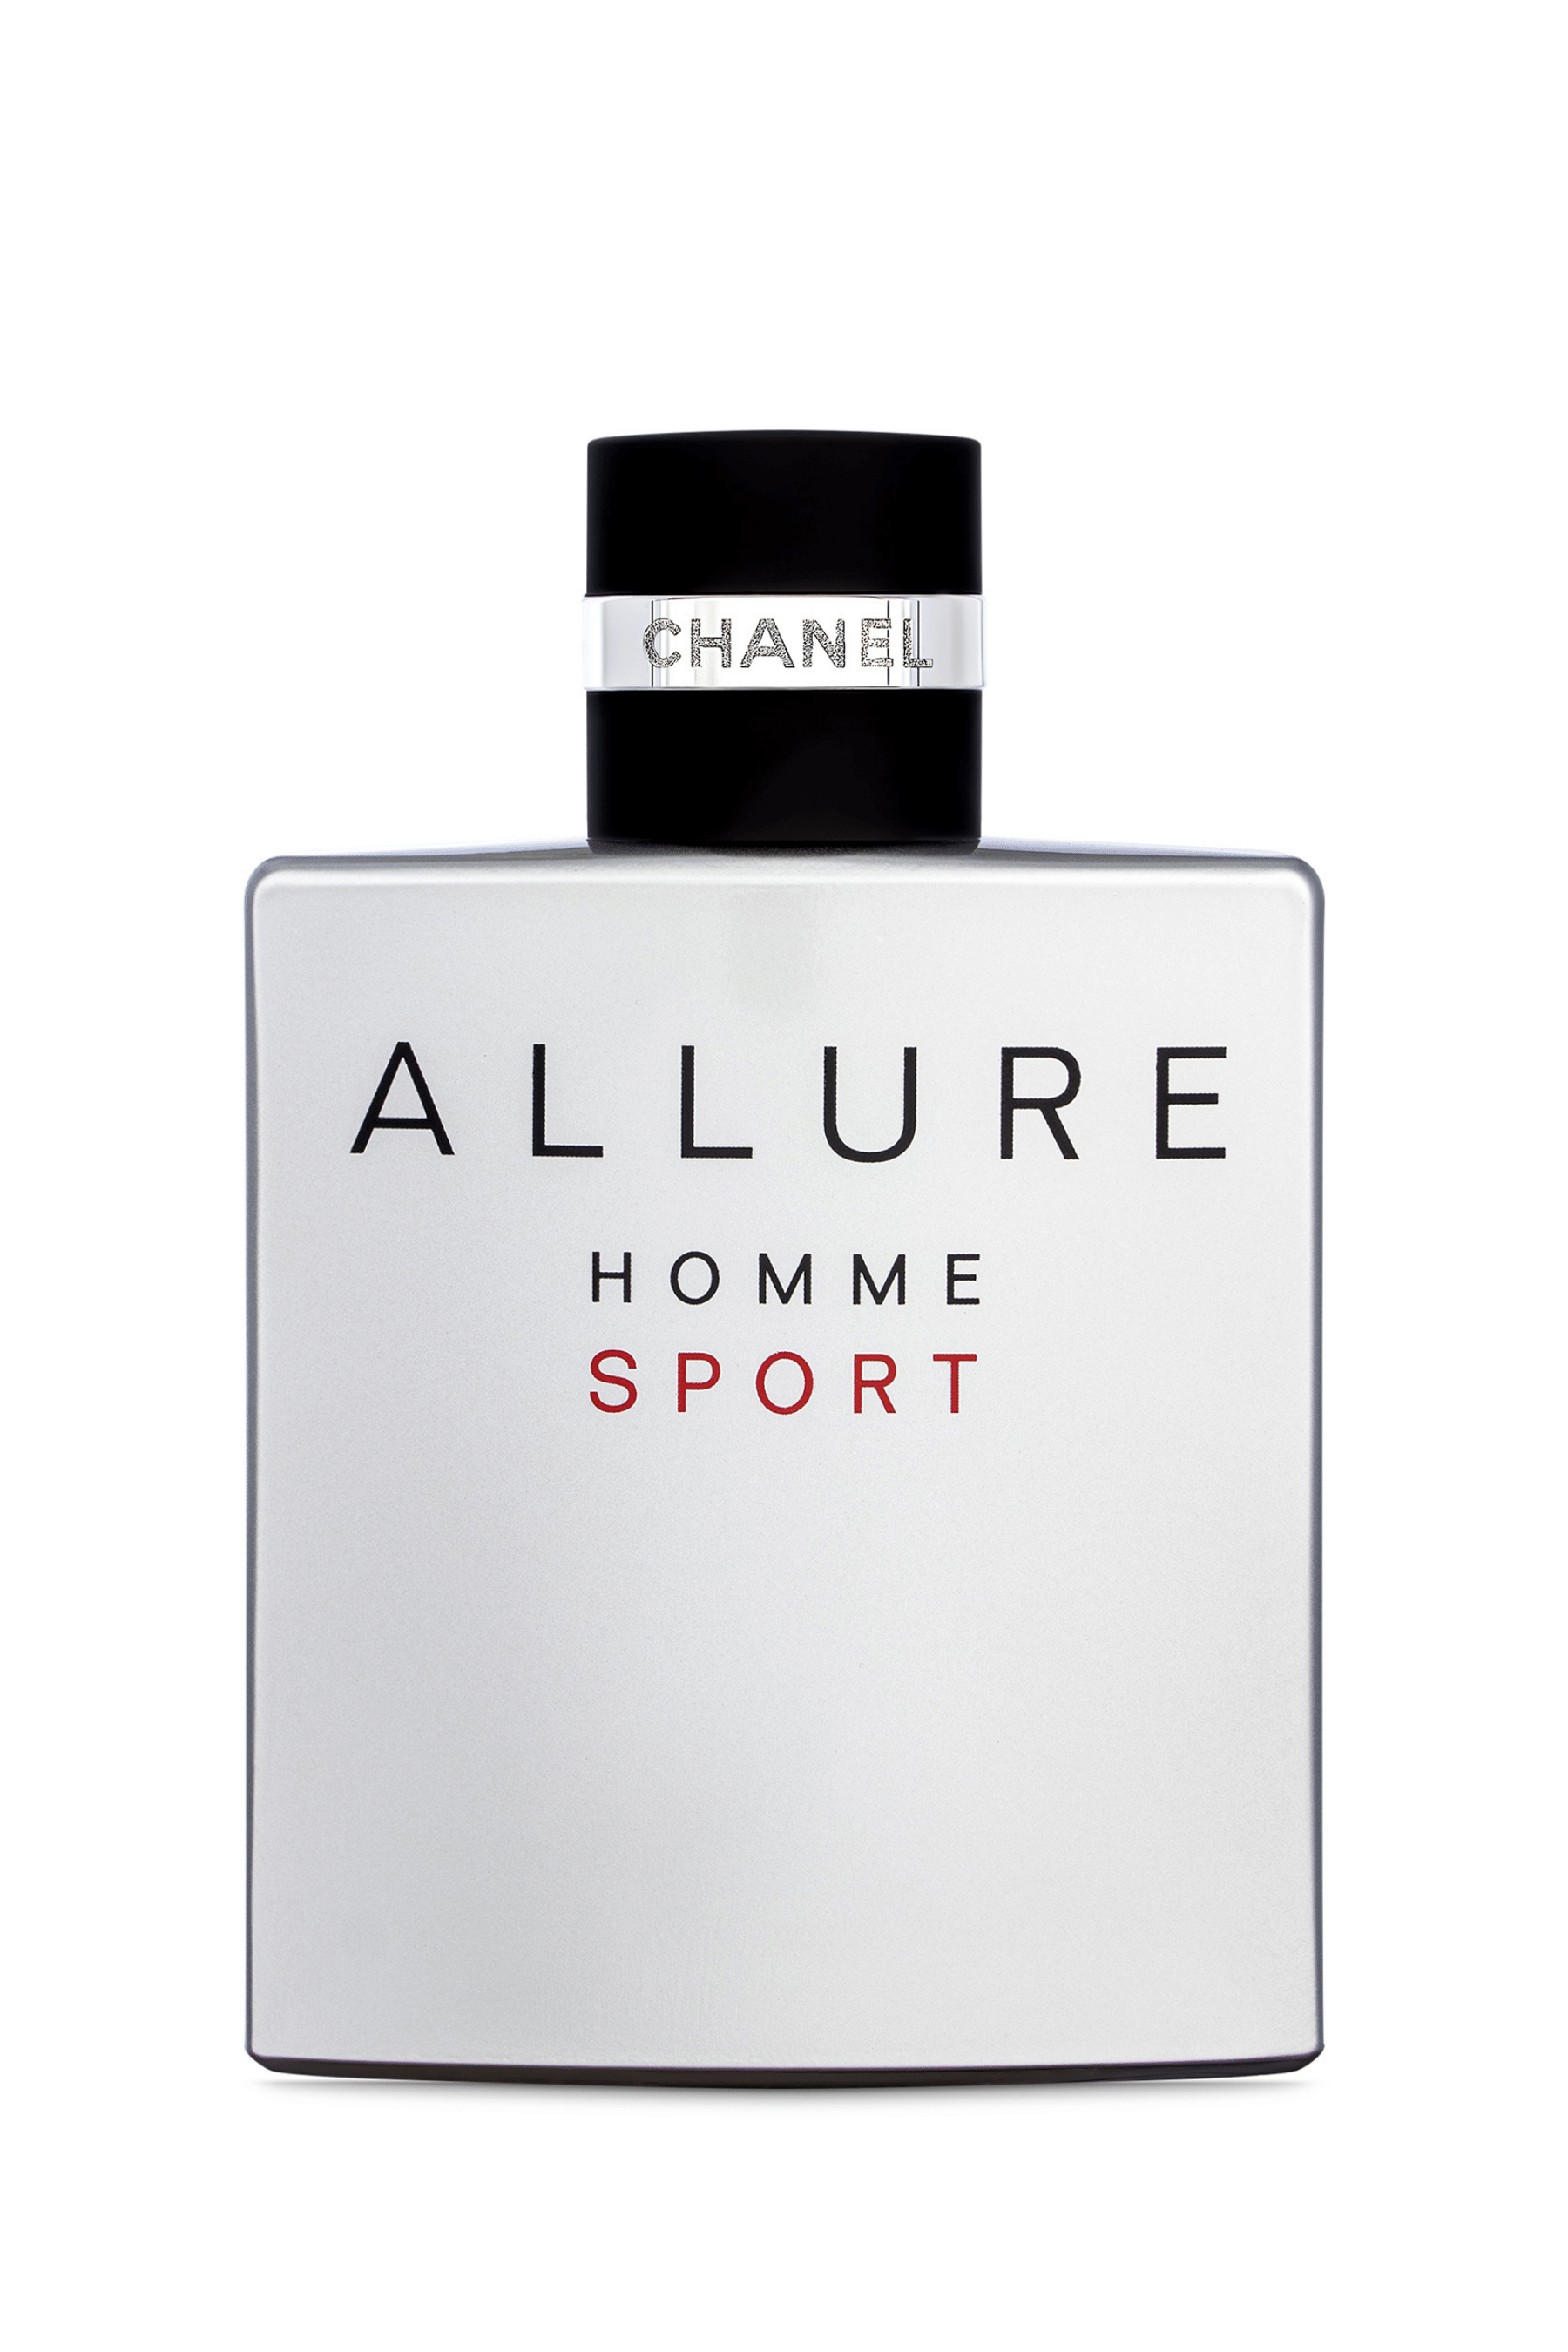 Vulx Perfumaria - Decant Perfume Allure Homme Sport - Chanel